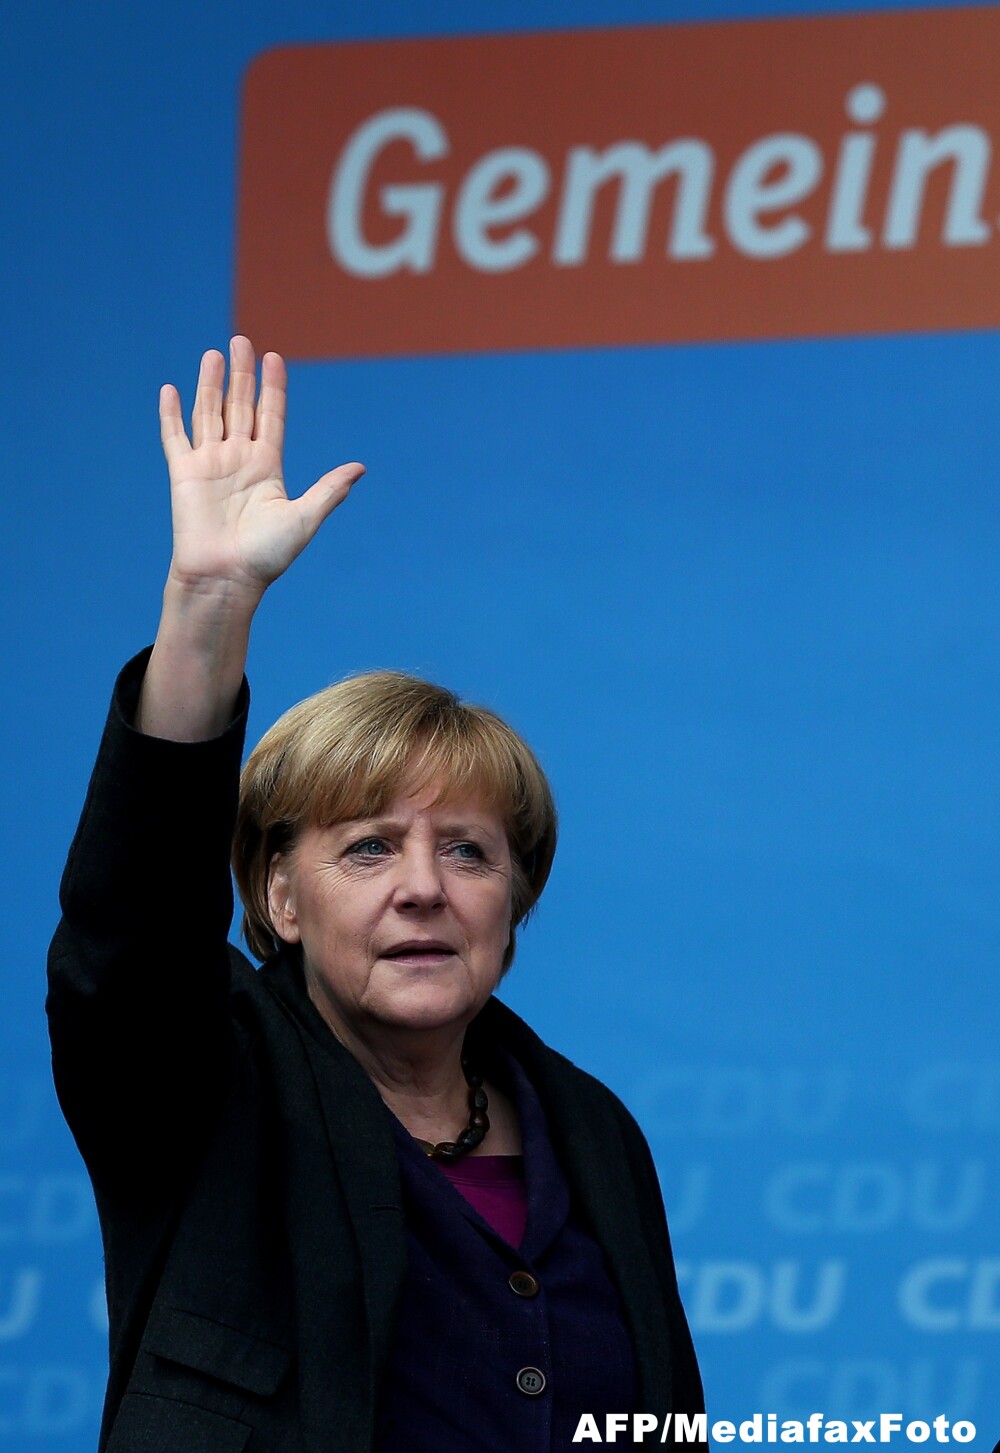 Alegeri legislative in Germania. Angela Merkel nu va obtine majoritatea, nici macar cu liberalii - Imaginea 1